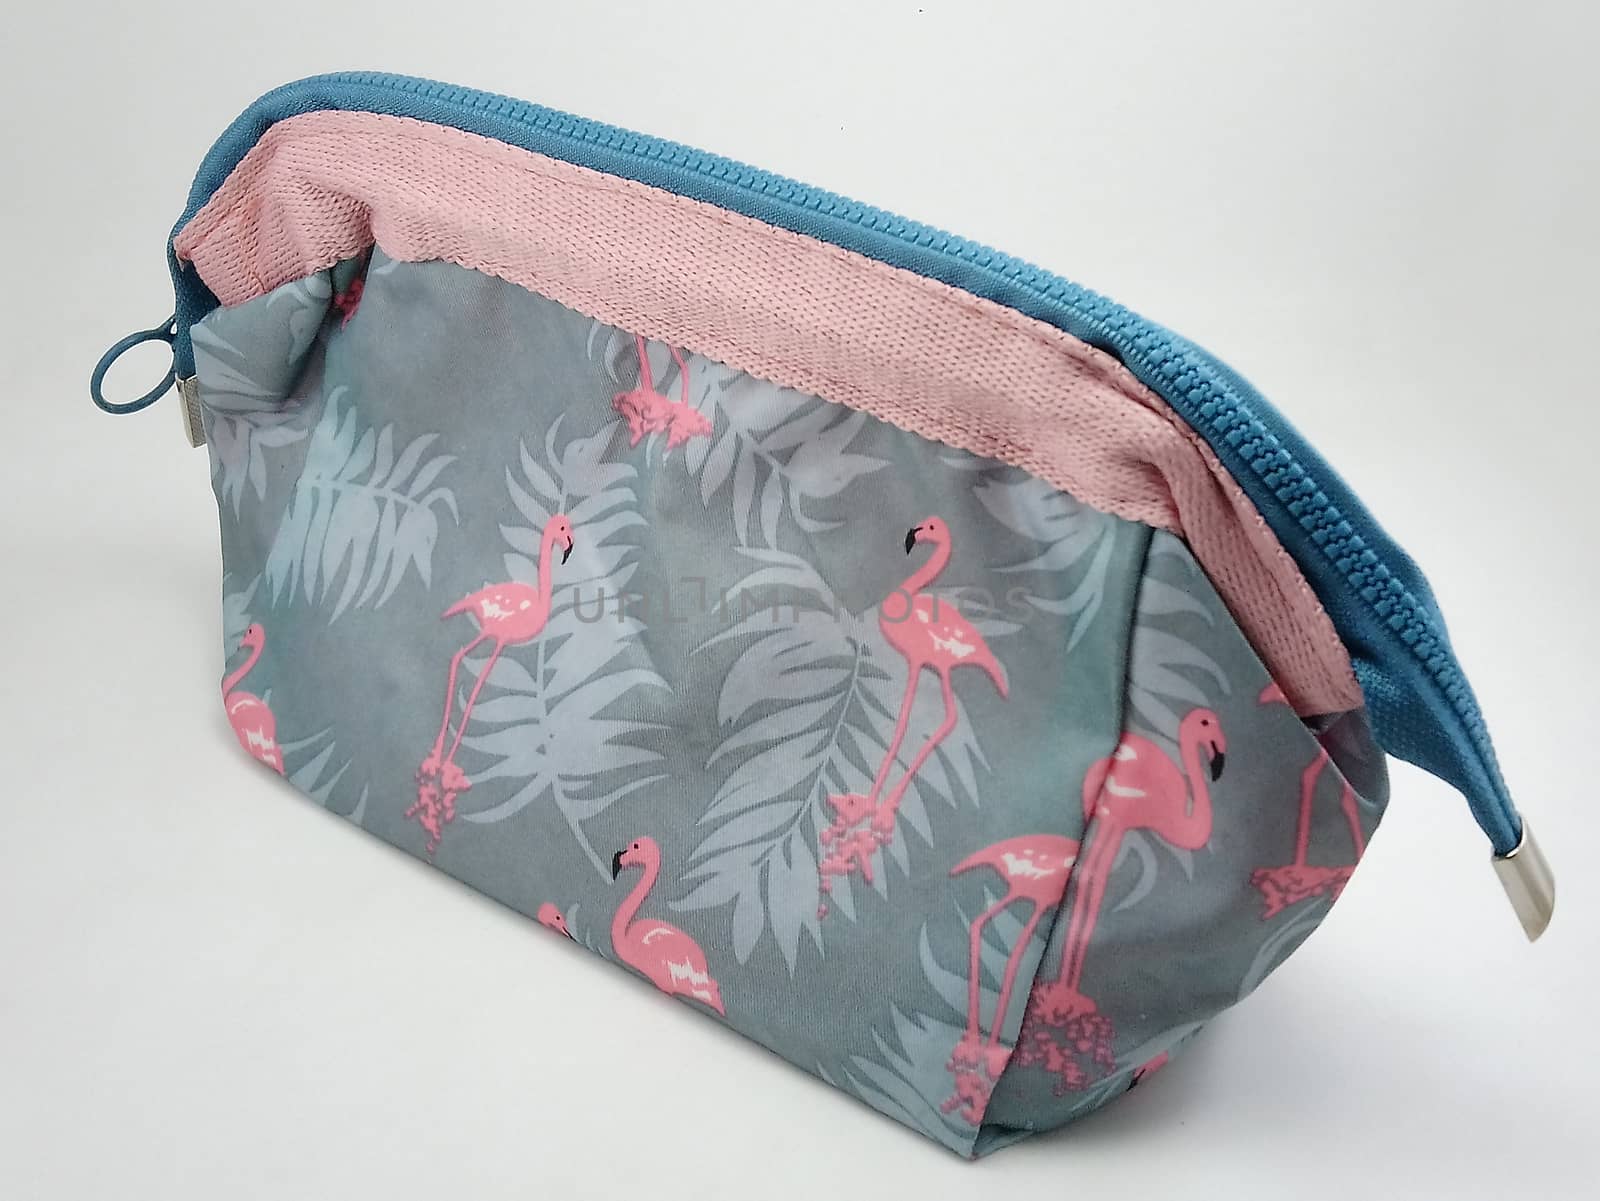 Flamingo pouch with zipper lock in Manila, Philippines by imwaltersy